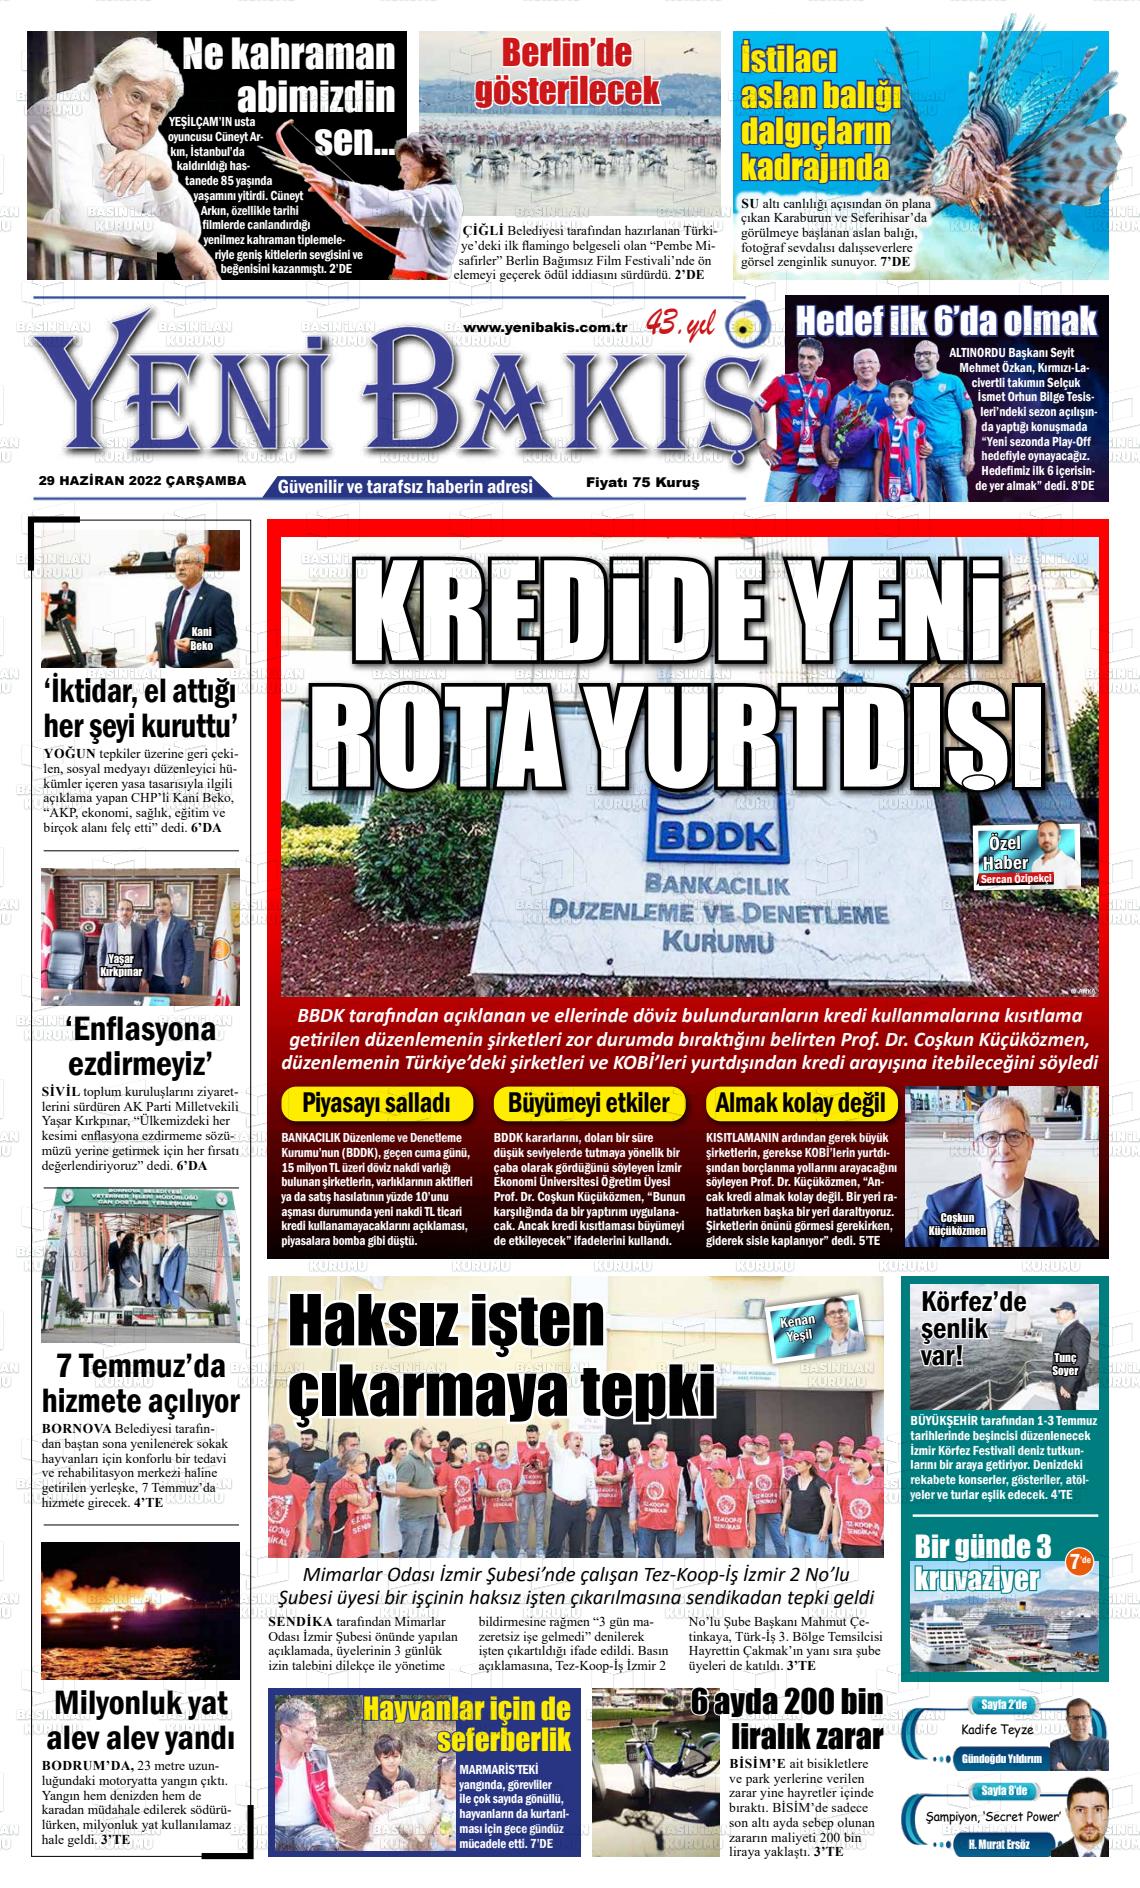 29 Haziran 2022 Yeni Bakış Gazete Manşeti